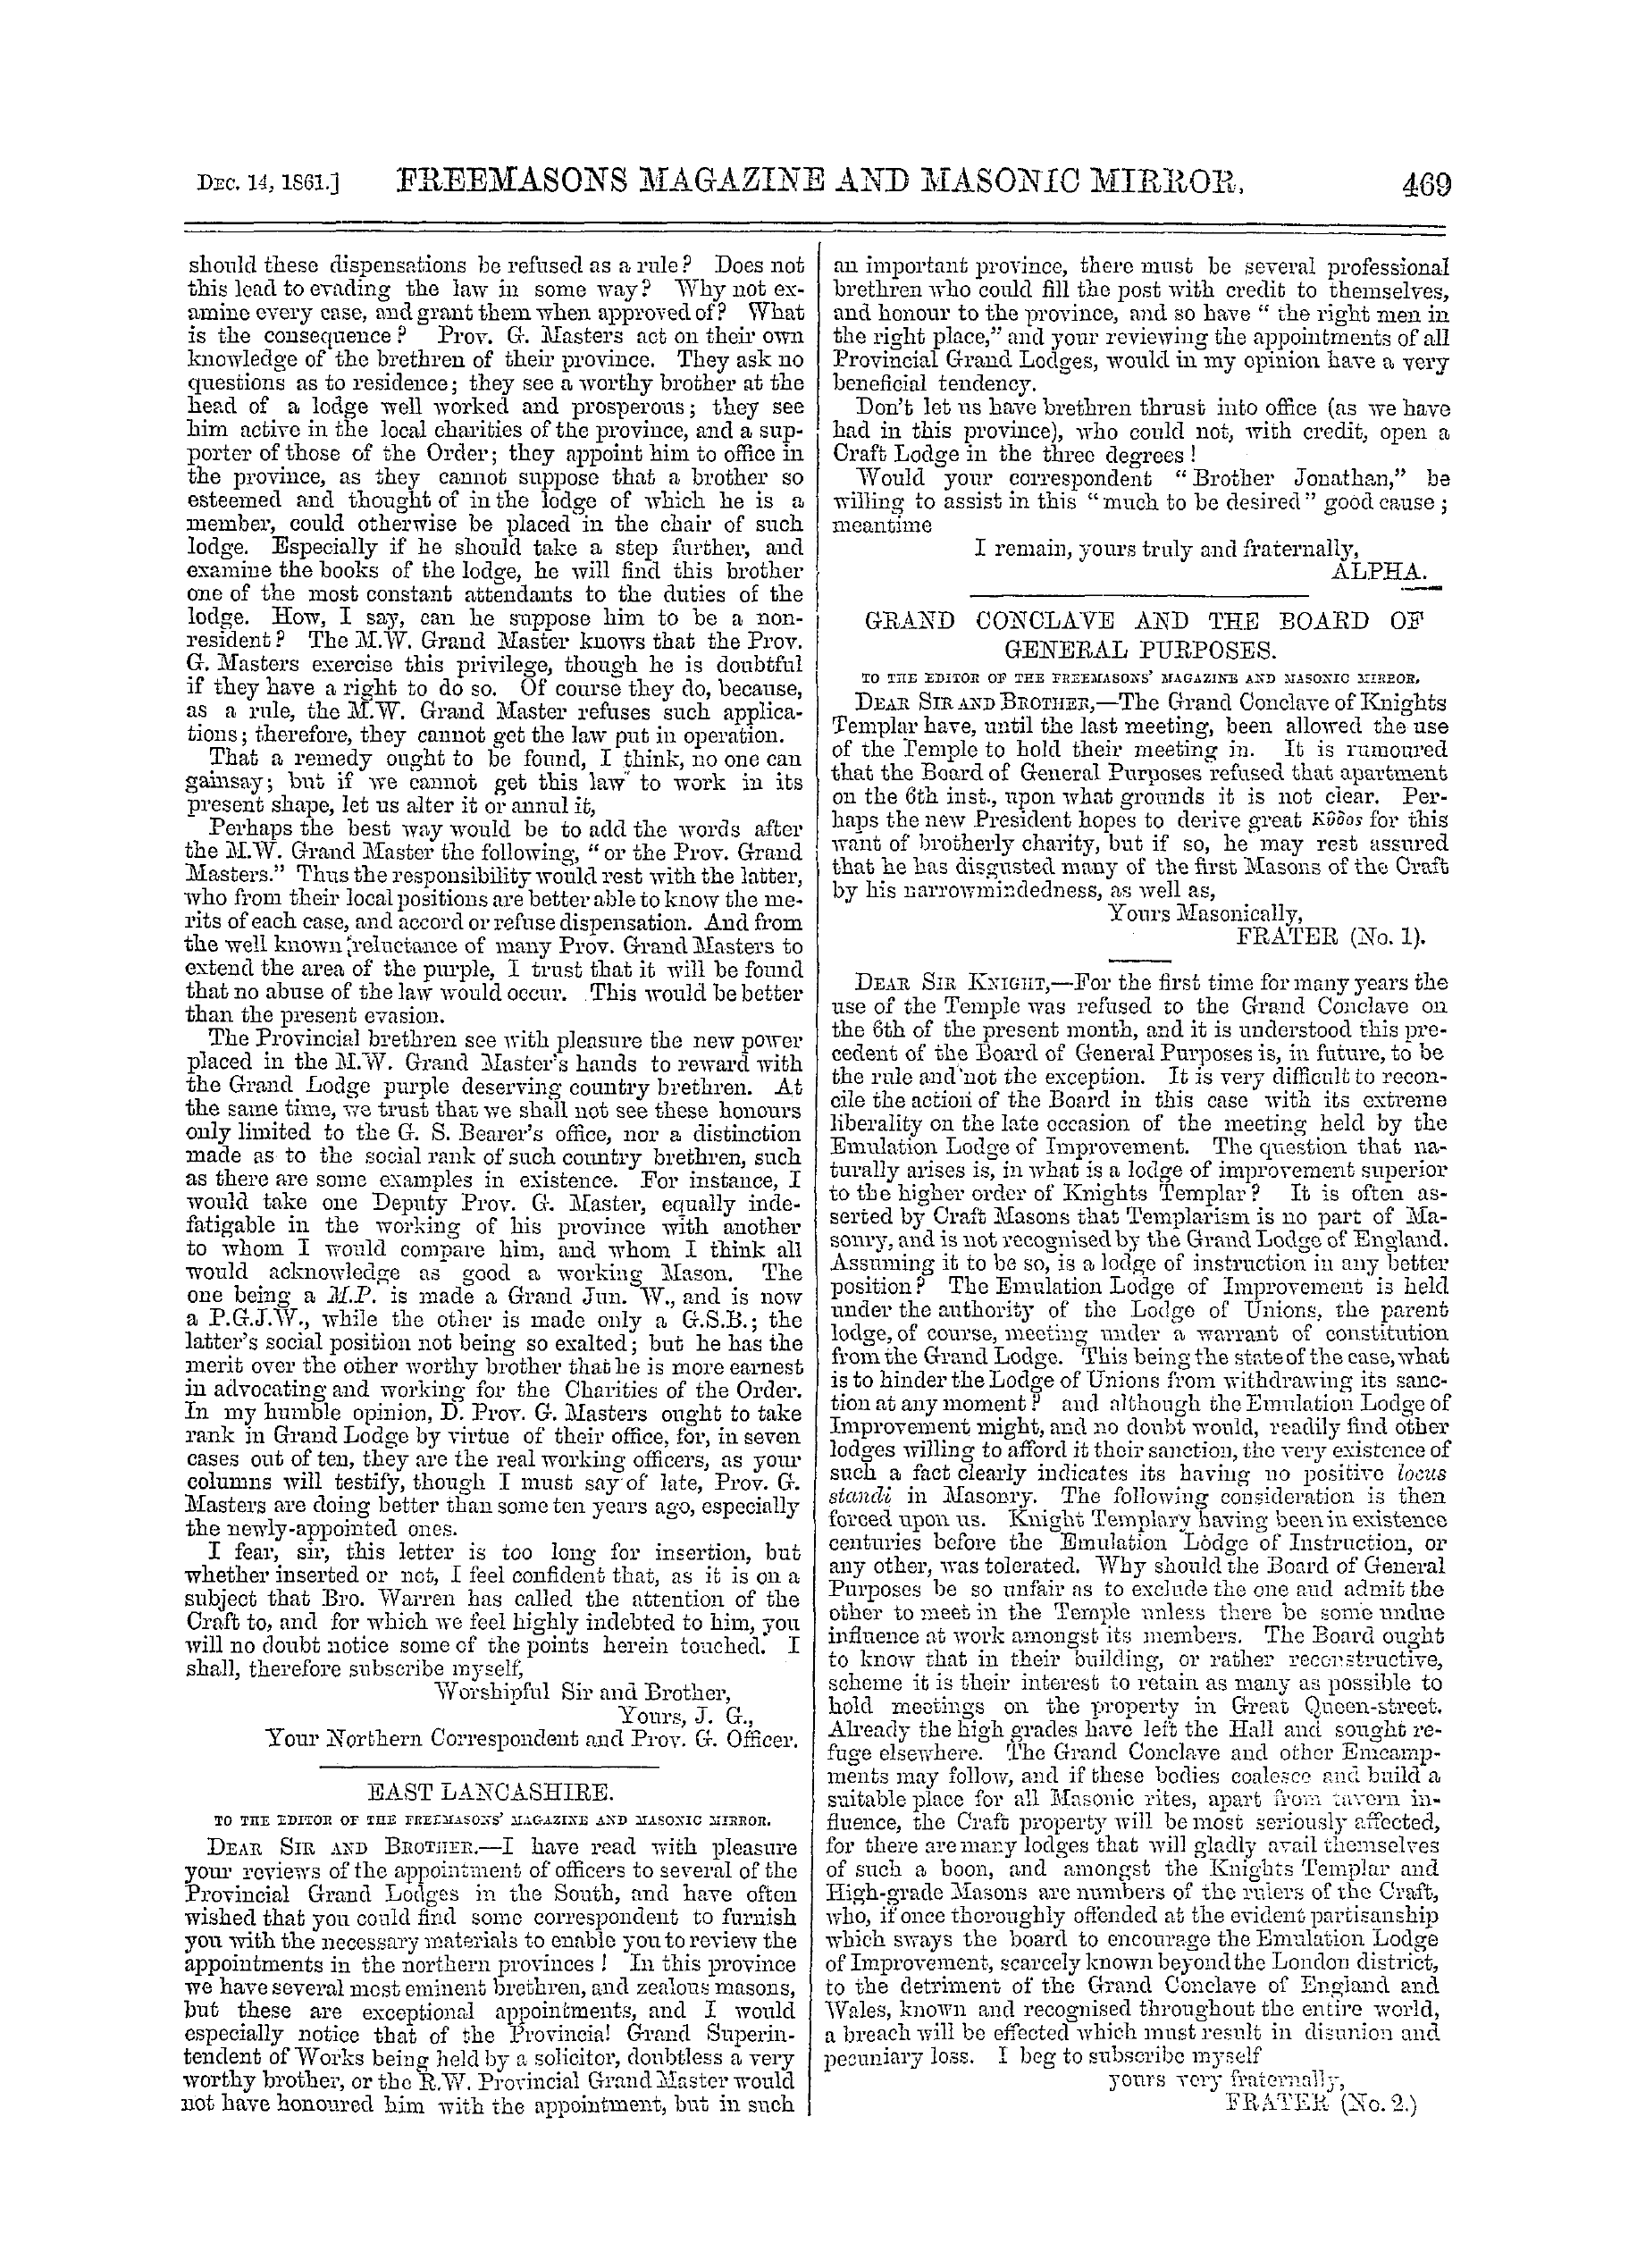 The Freemasons' Monthly Magazine: 1861-12-14 - Correspondence.